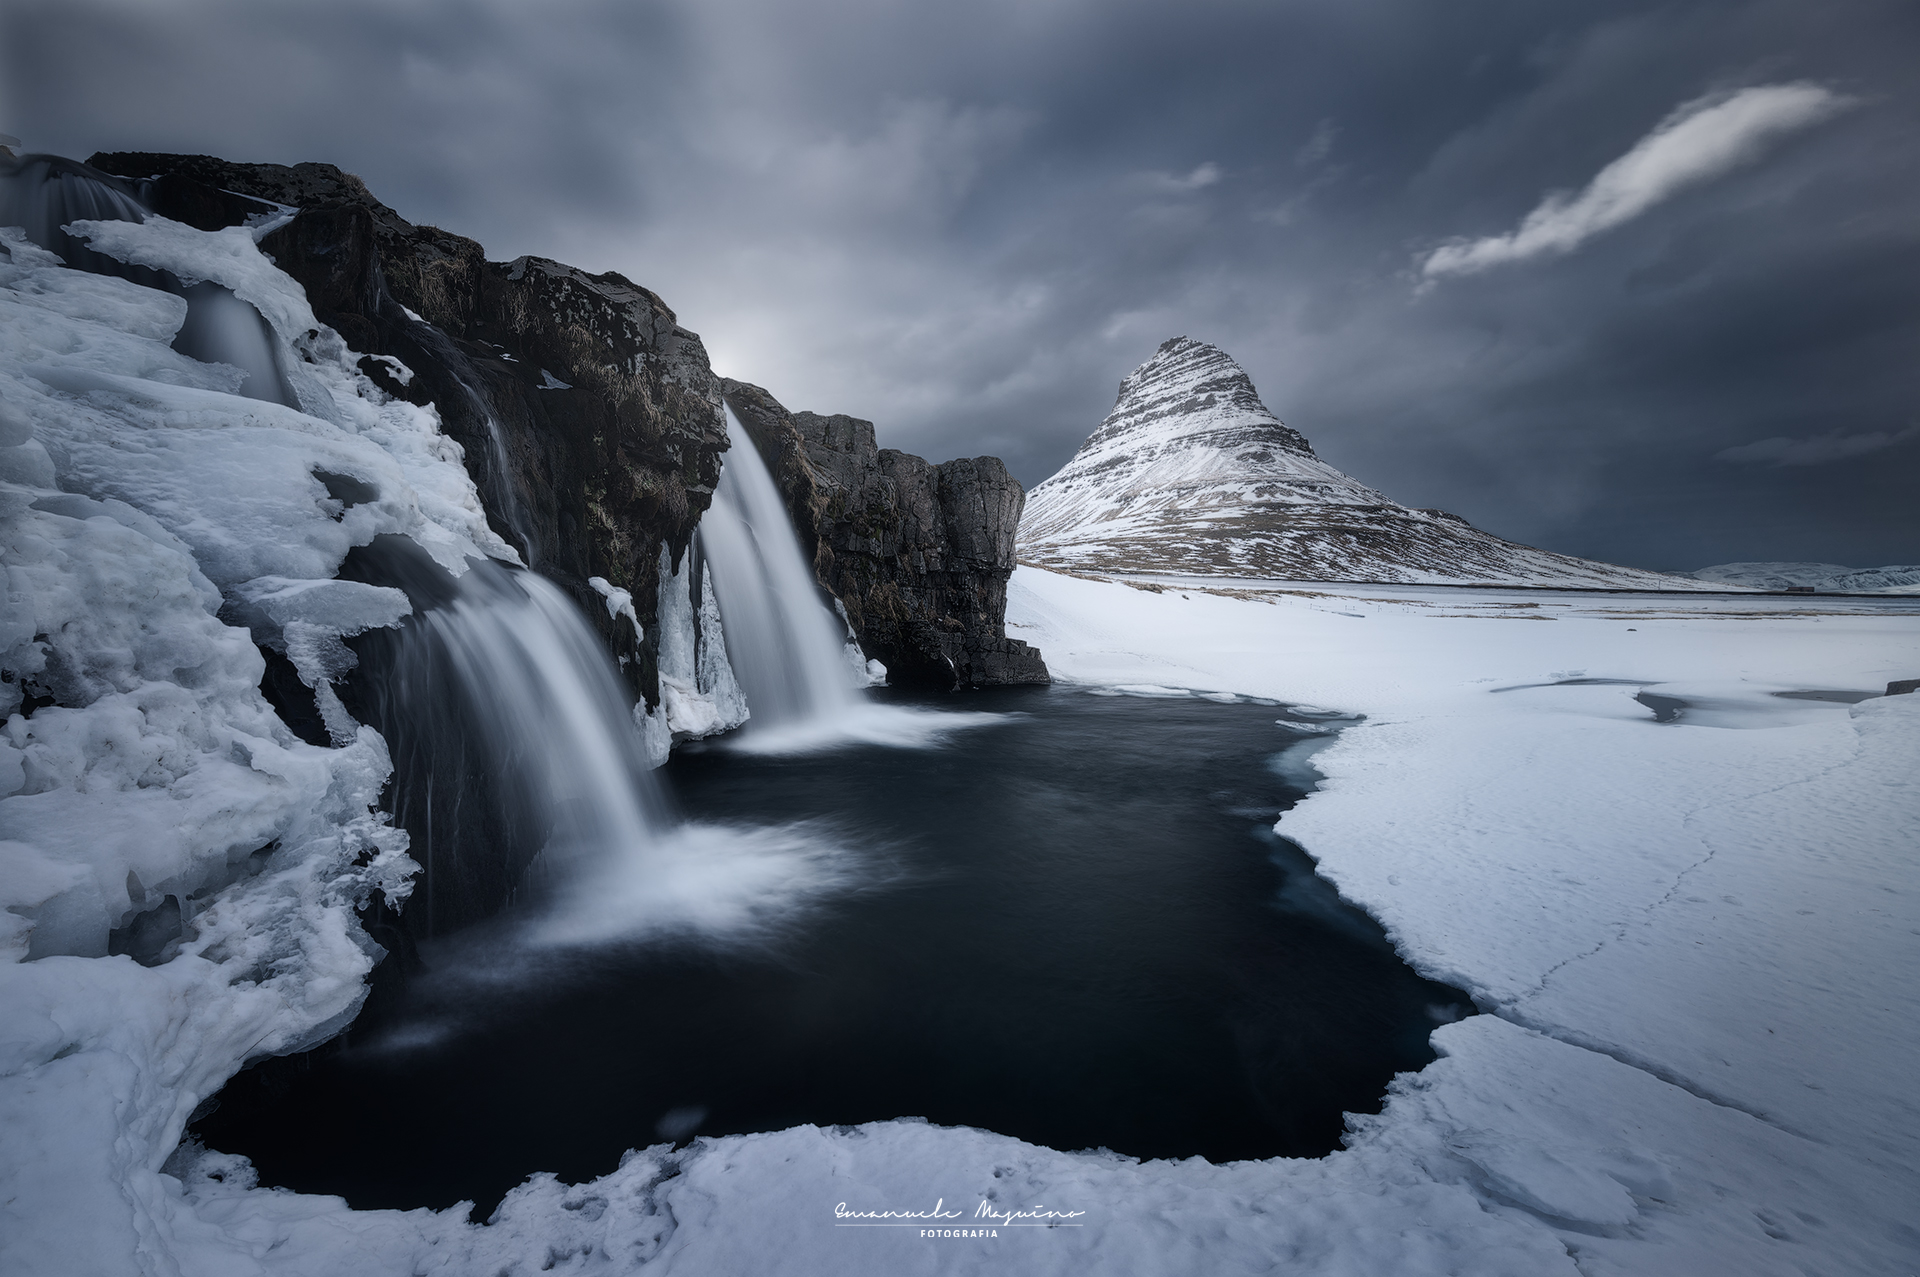 A breath of Iceland...